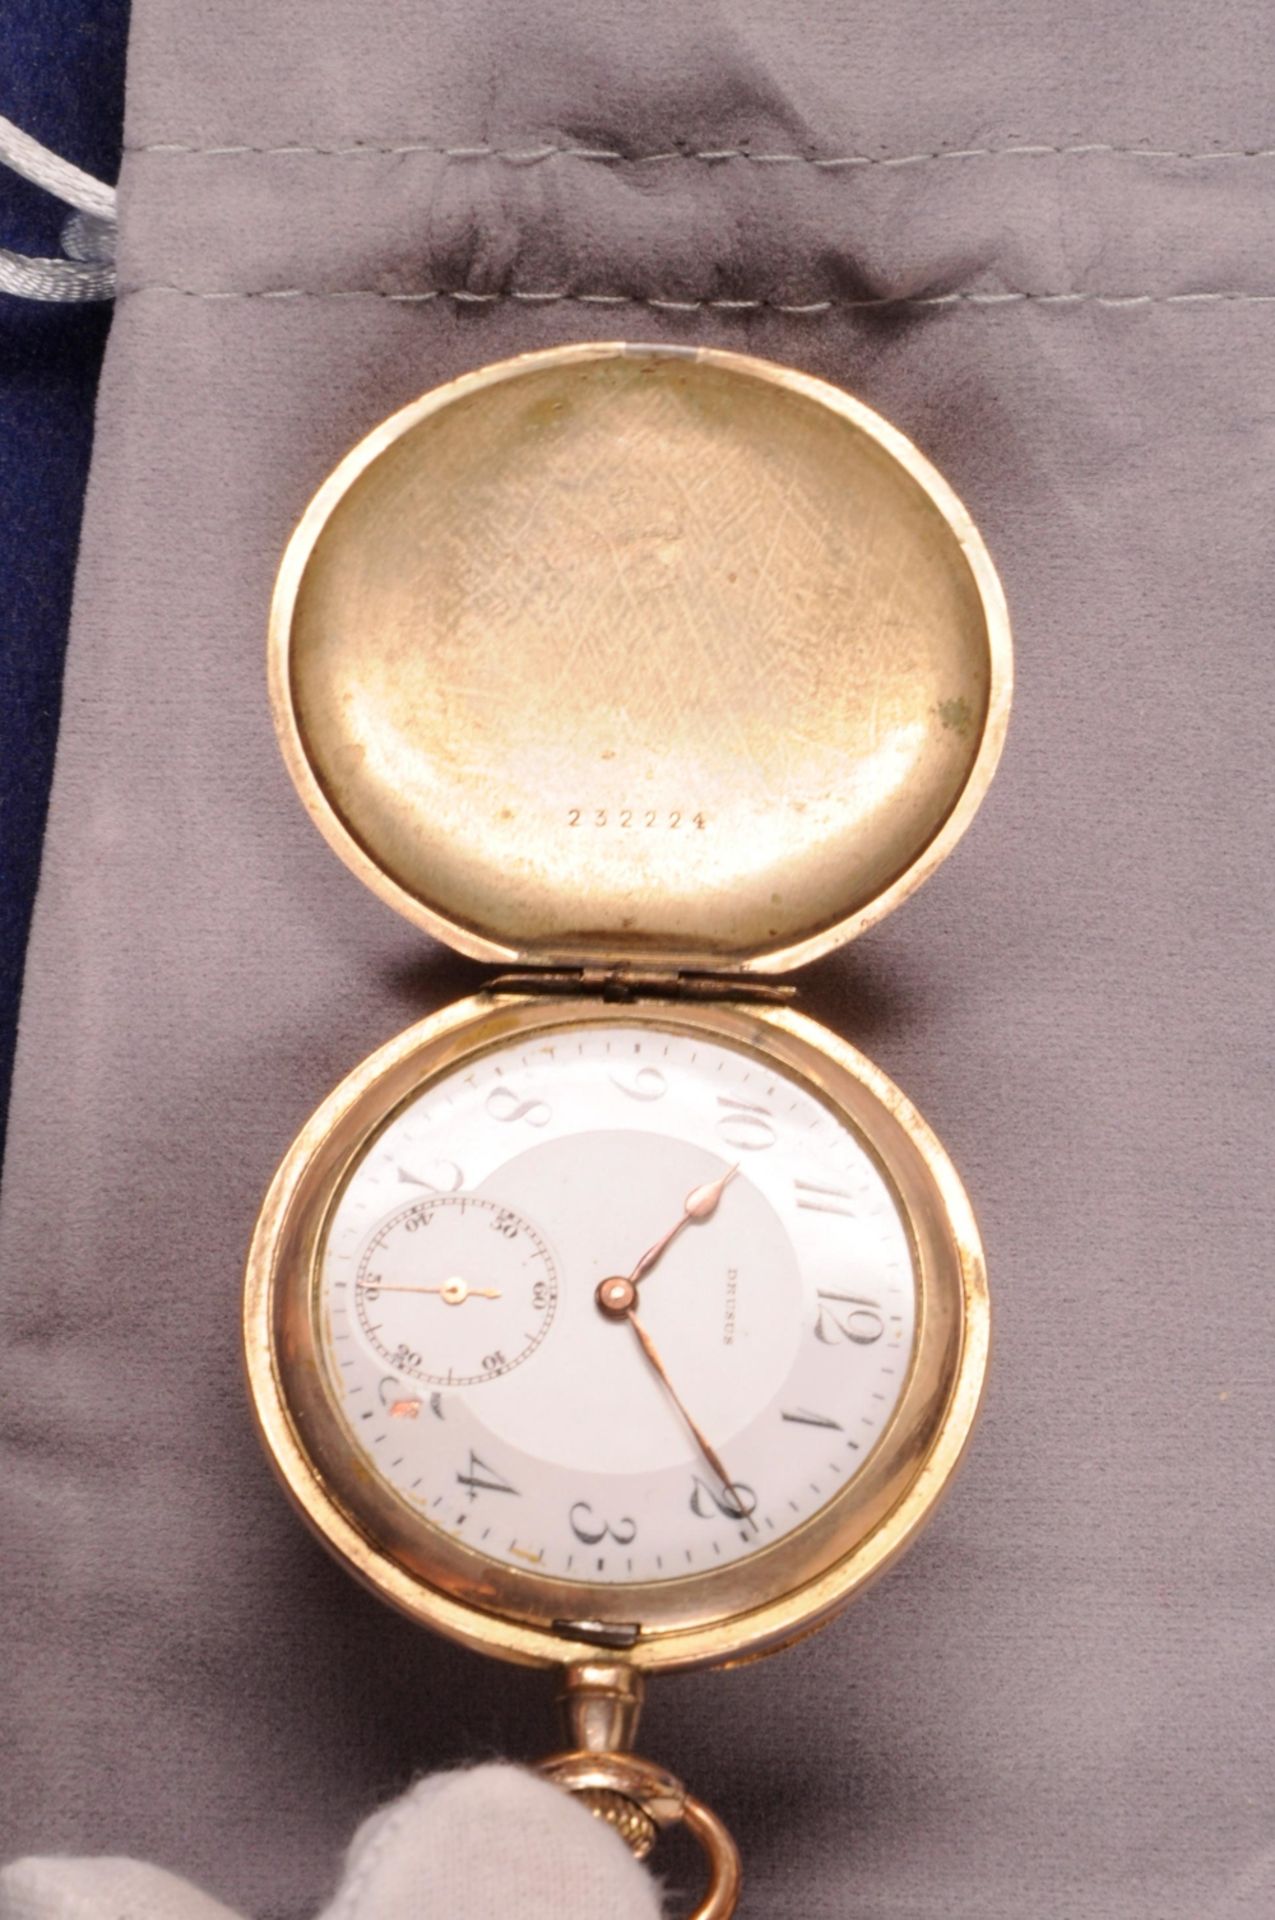 Pocket-watch \\Drusus\\ Savonette 1915-1930, design mark: bull (G. Rough Pforzheim), Germany, - Image 2 of 5